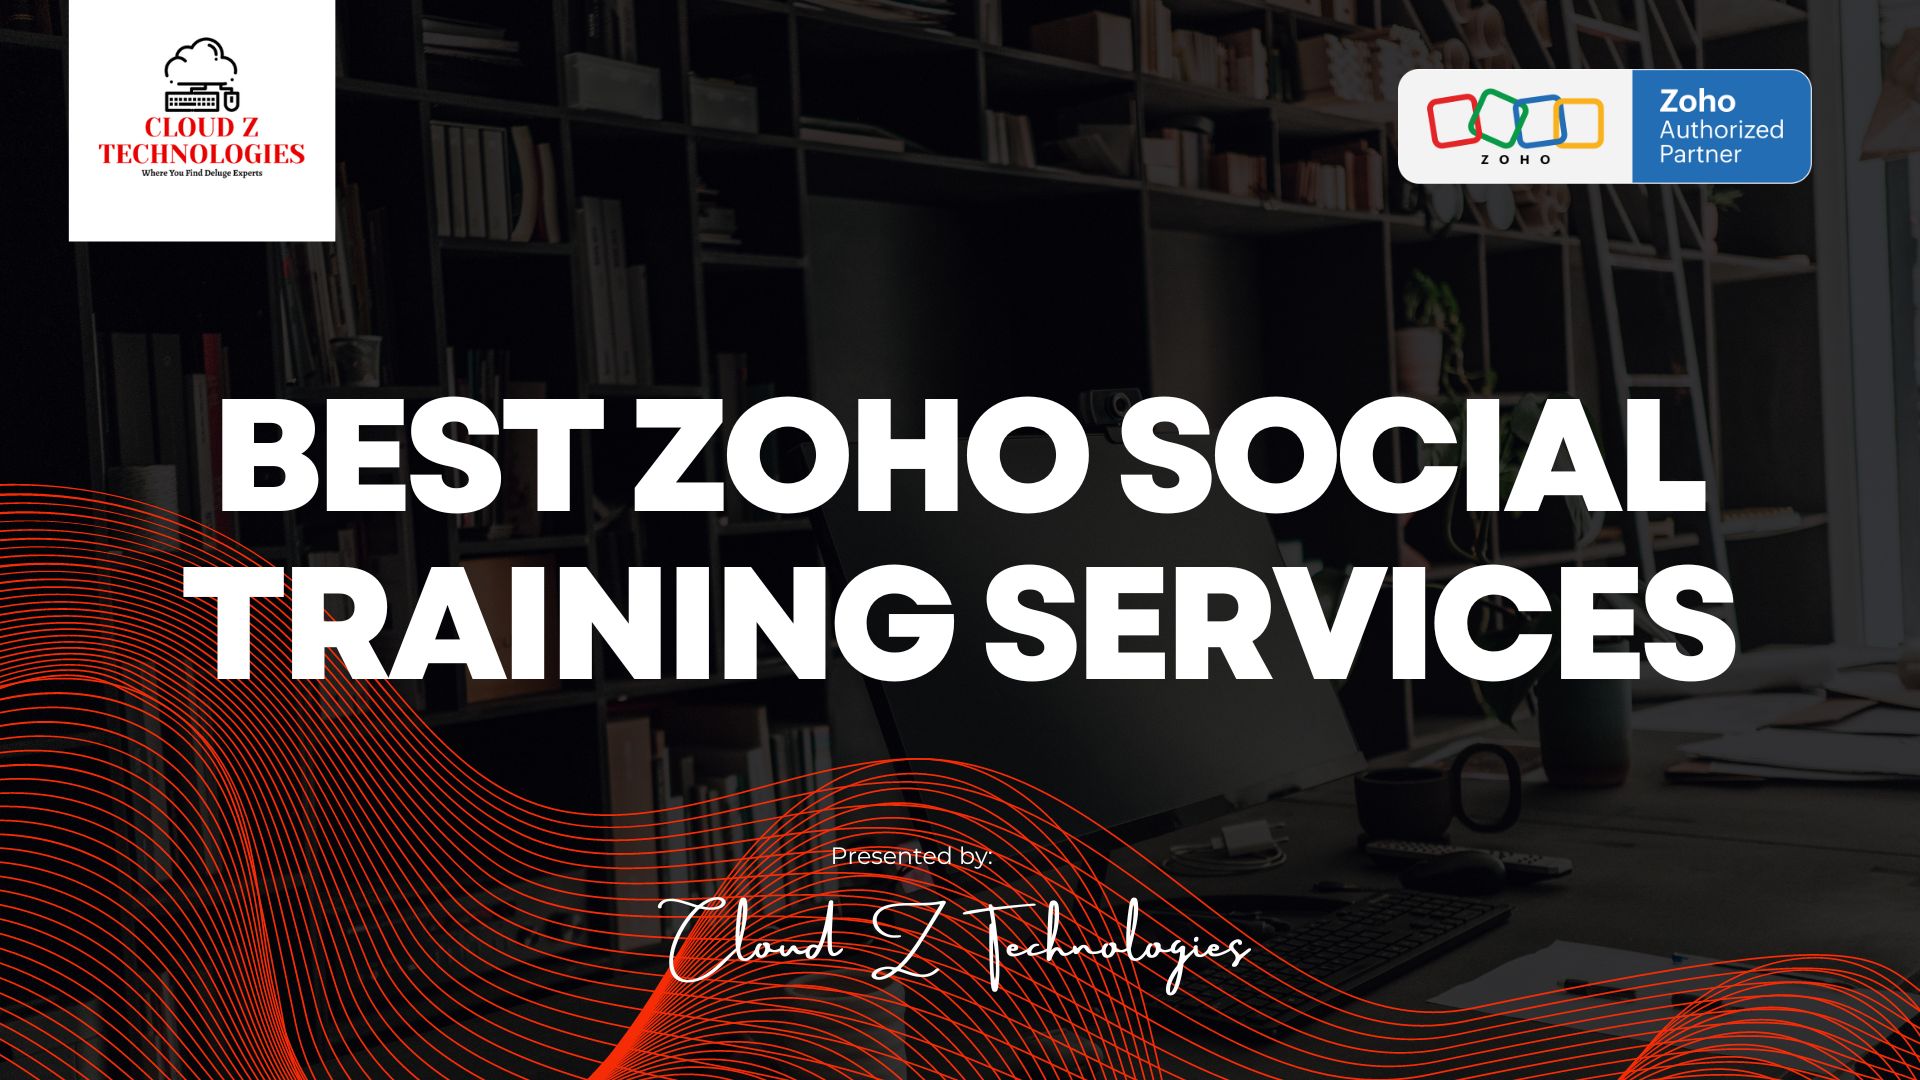 Zoho social training services